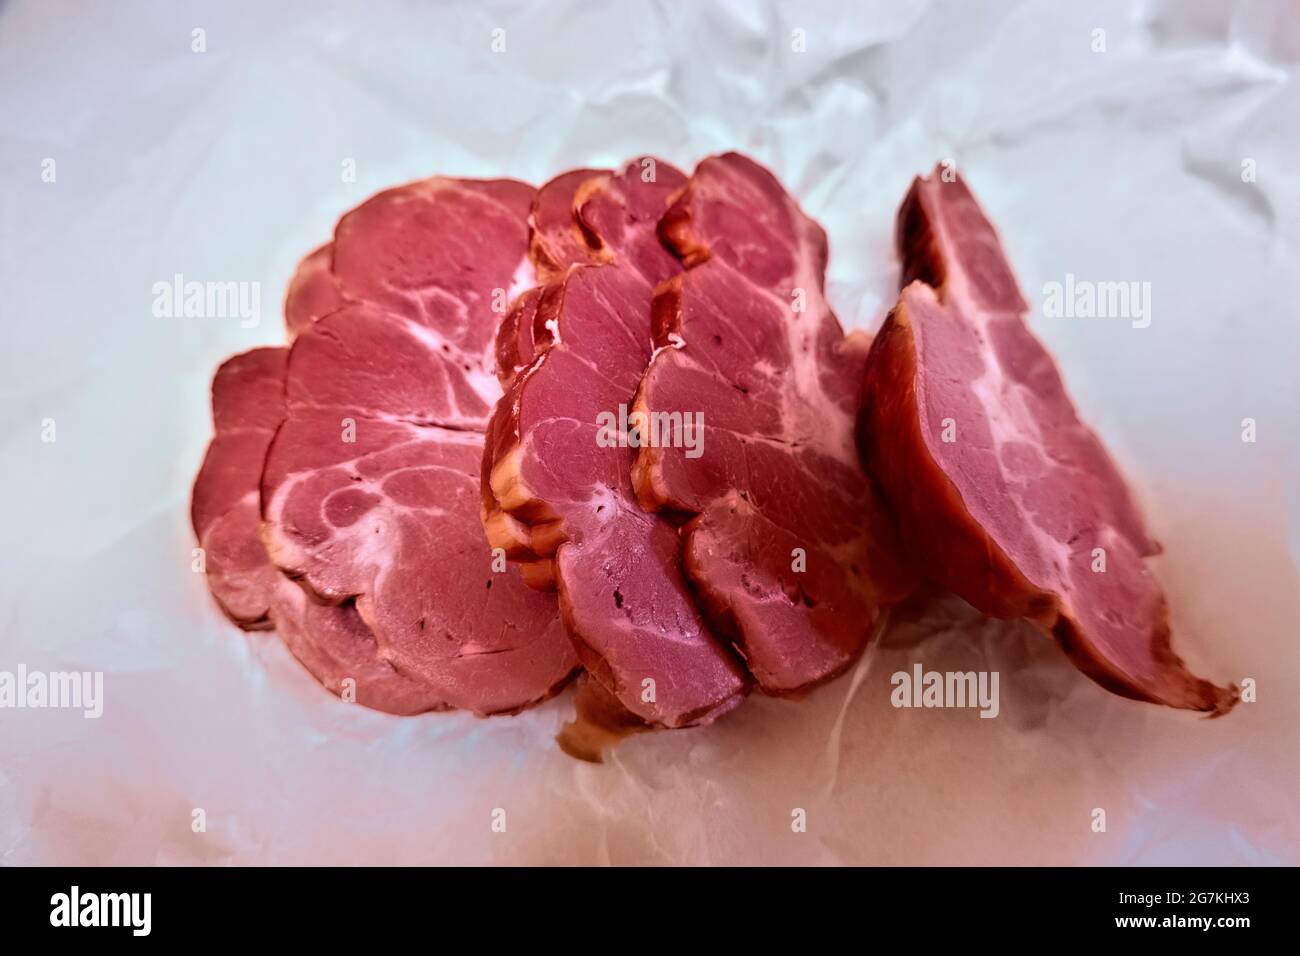 Preparing pork loin (ham) for gumbo, New Orleans, Louisiana, U.S.A Stock Photo